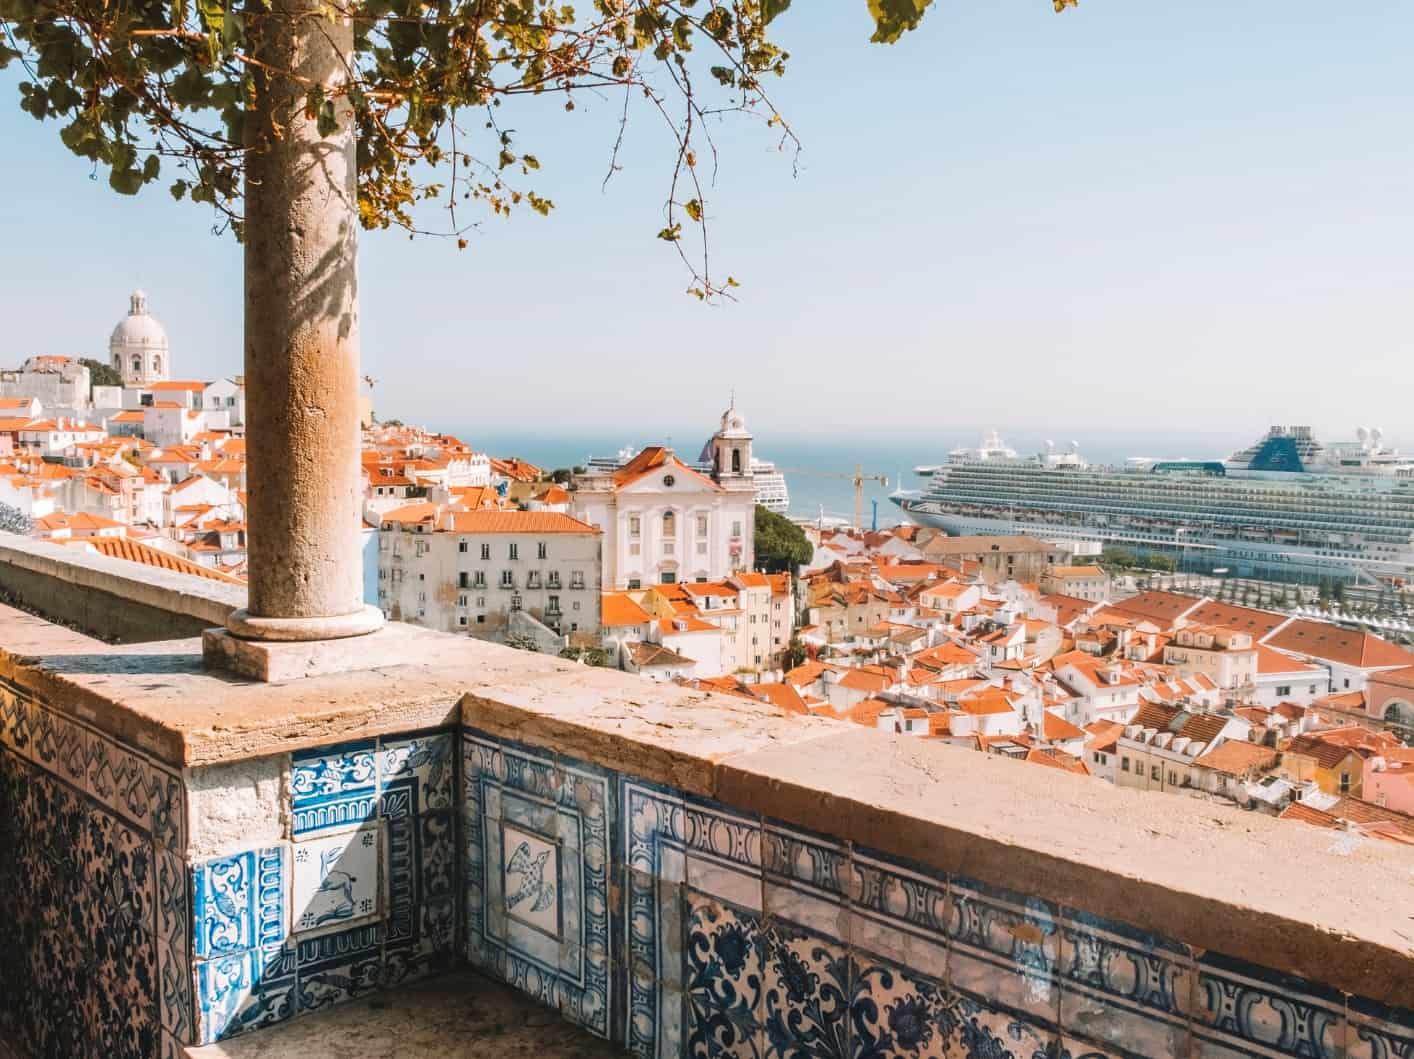 Miradouro de Santa Luzia: Some of the Best Views in Lisbon